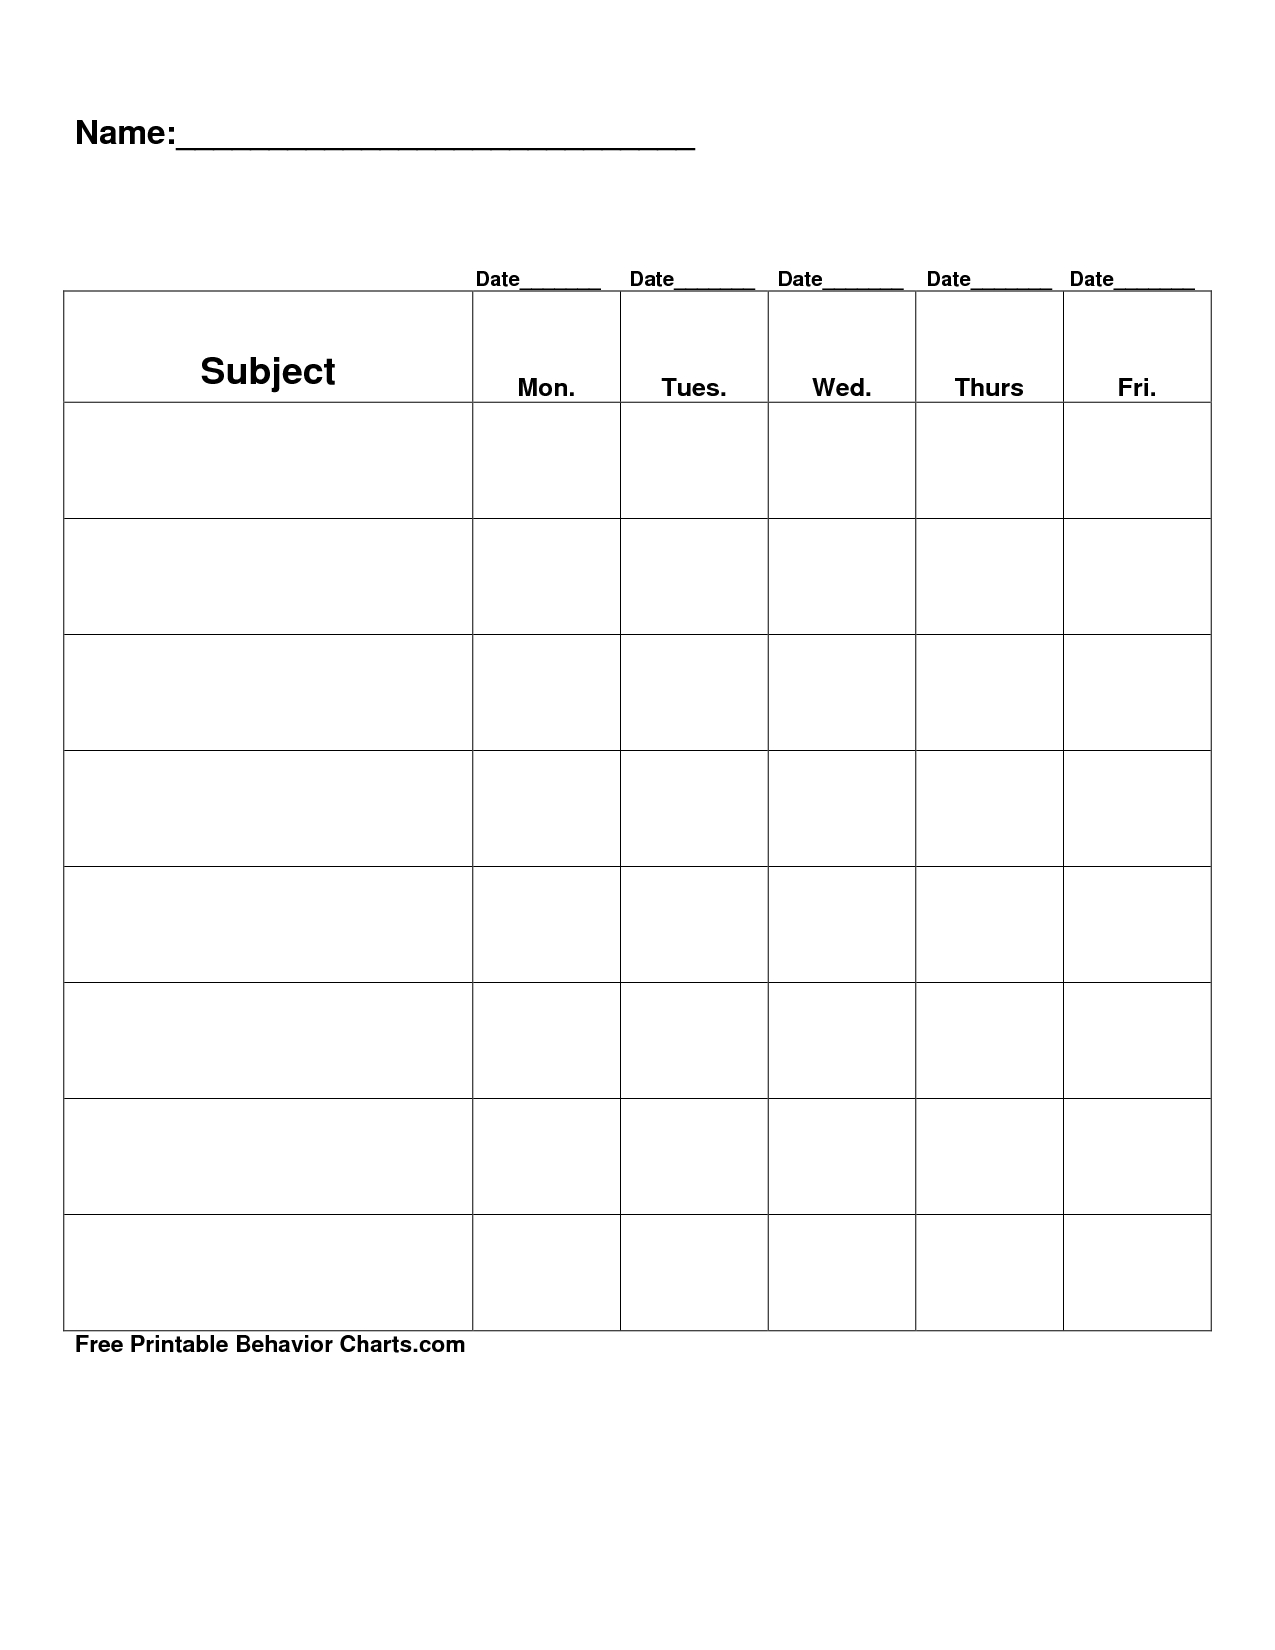 Free Printable Blank Charts | Free Printable Behavior Charts Com - Free Printable Behavior Charts For Elementary Students